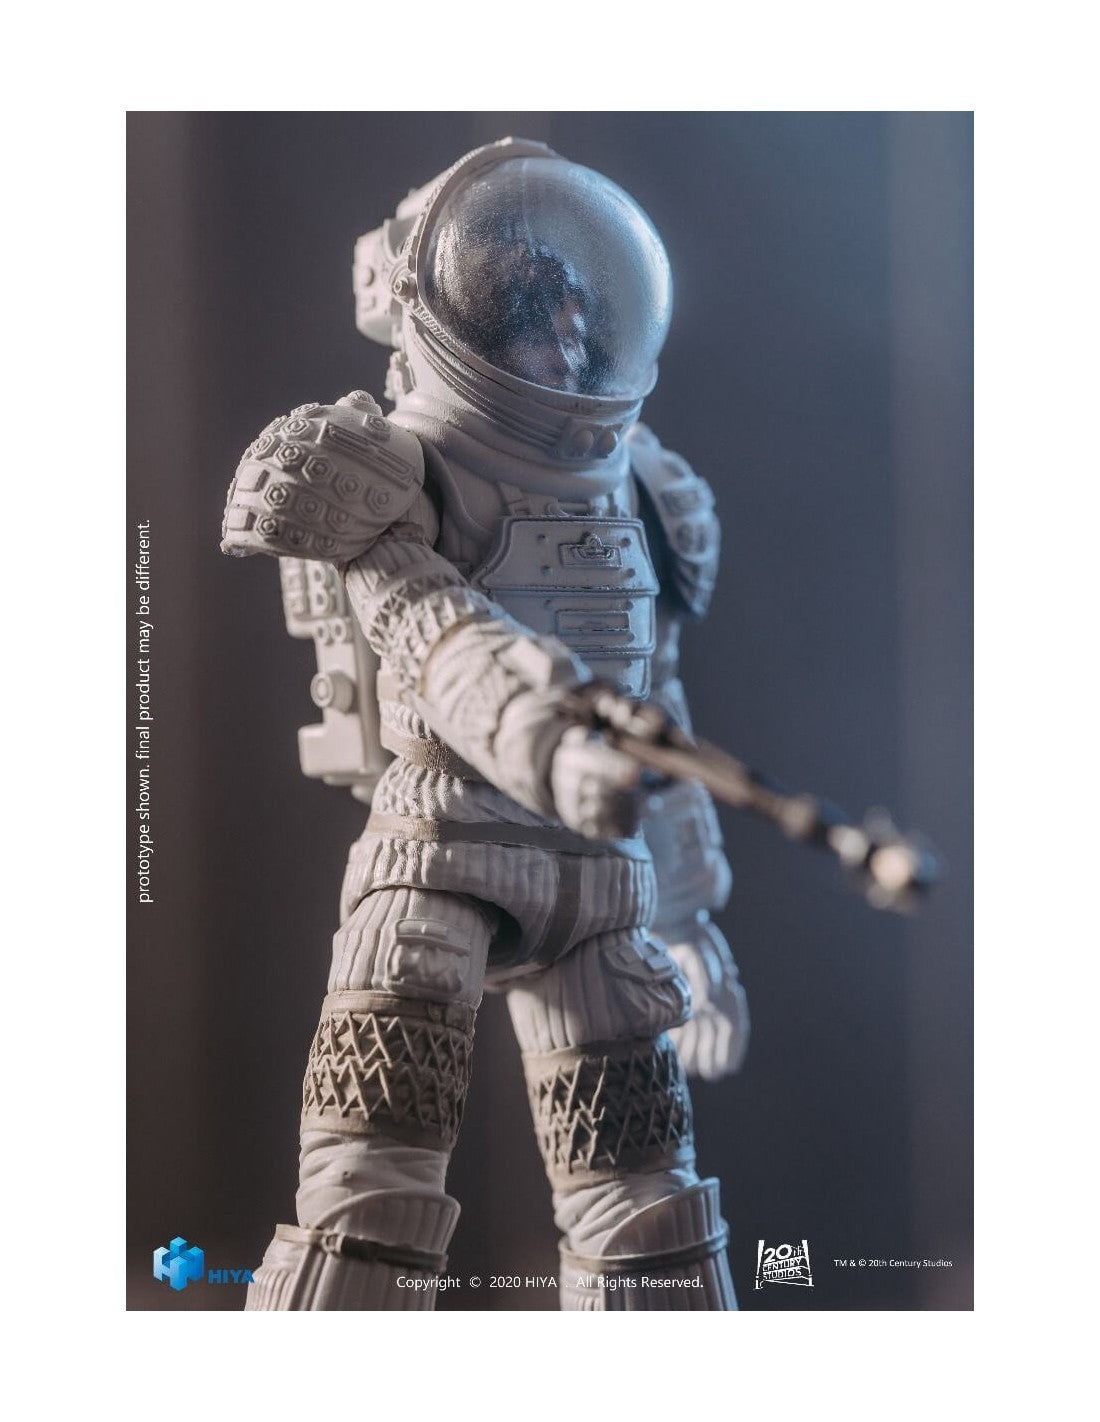 Alien Ripley in Spacesuit Exquisite Mini-Action Figure